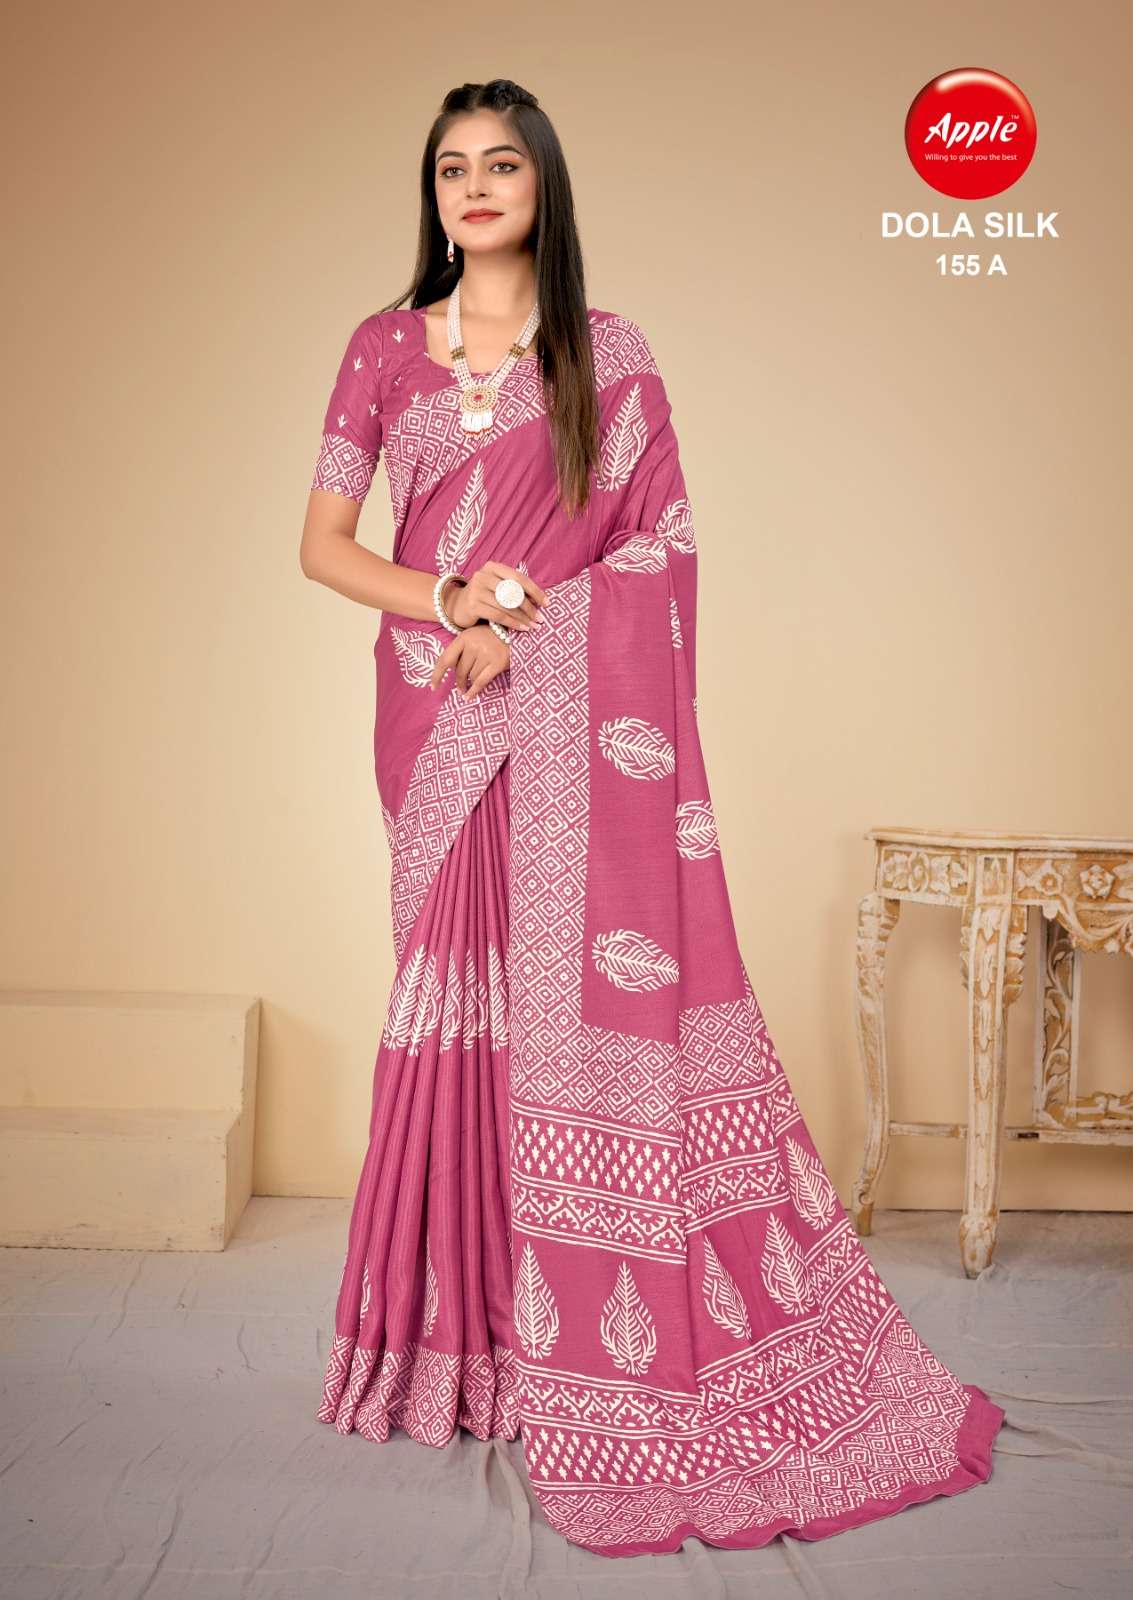 apple saree dola silk 155 fancy colour matching saris online supplier 